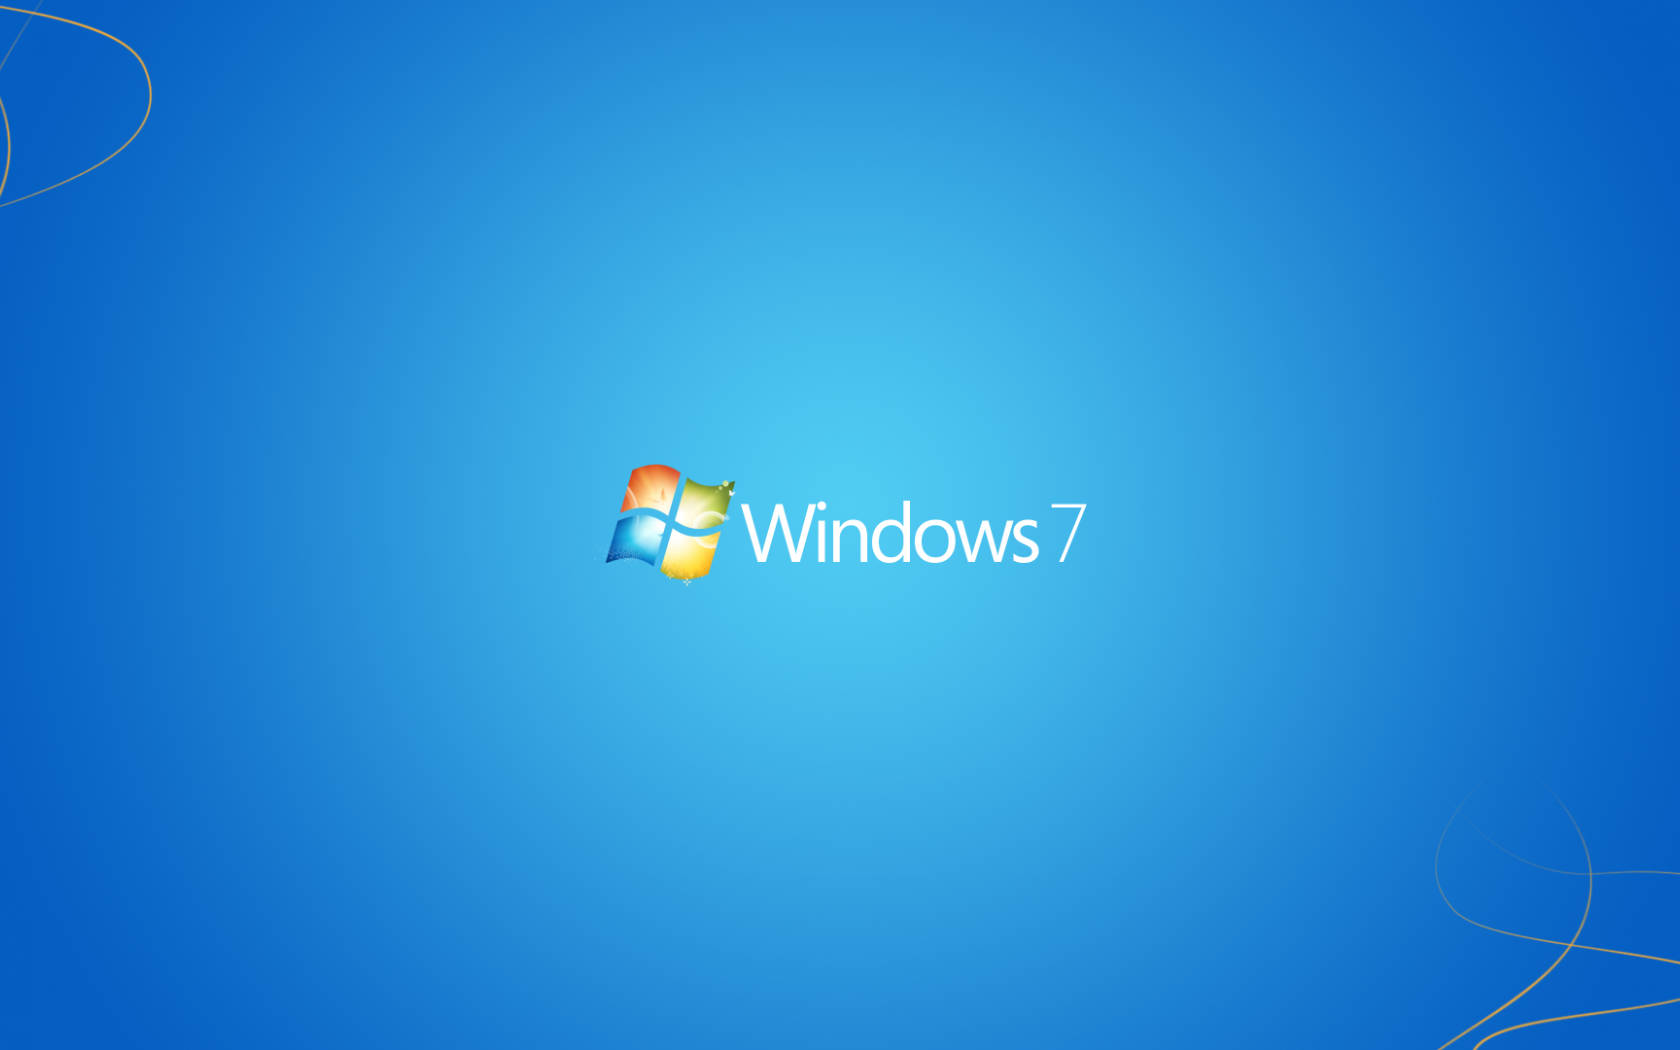 Enkelblå Original Windows 7. Wallpaper